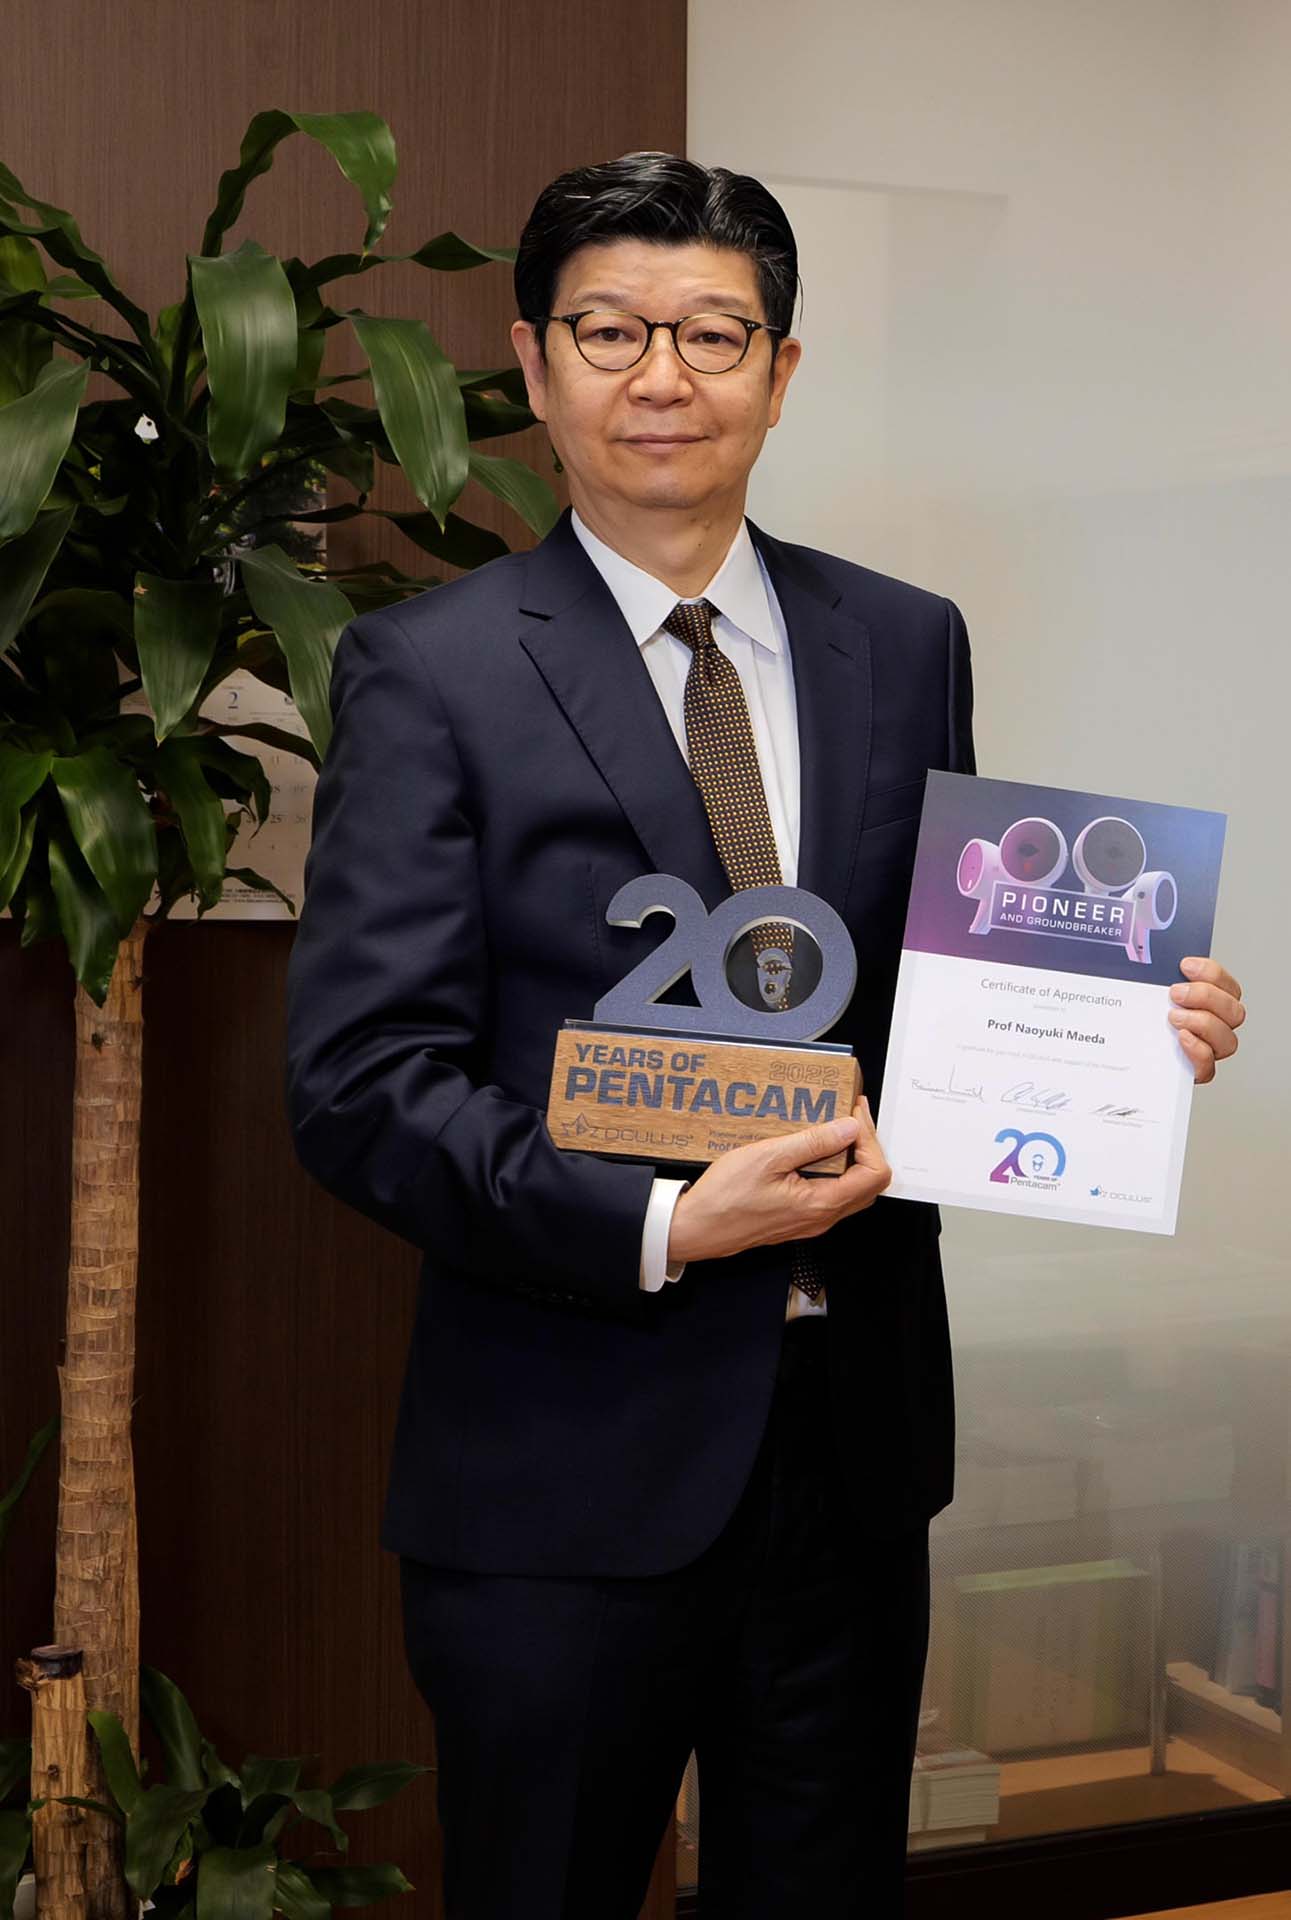 Prof. Maeda Naoyuki holding the 20th Anniversary Pentacam® Trophy and the Certificate of Appreciation